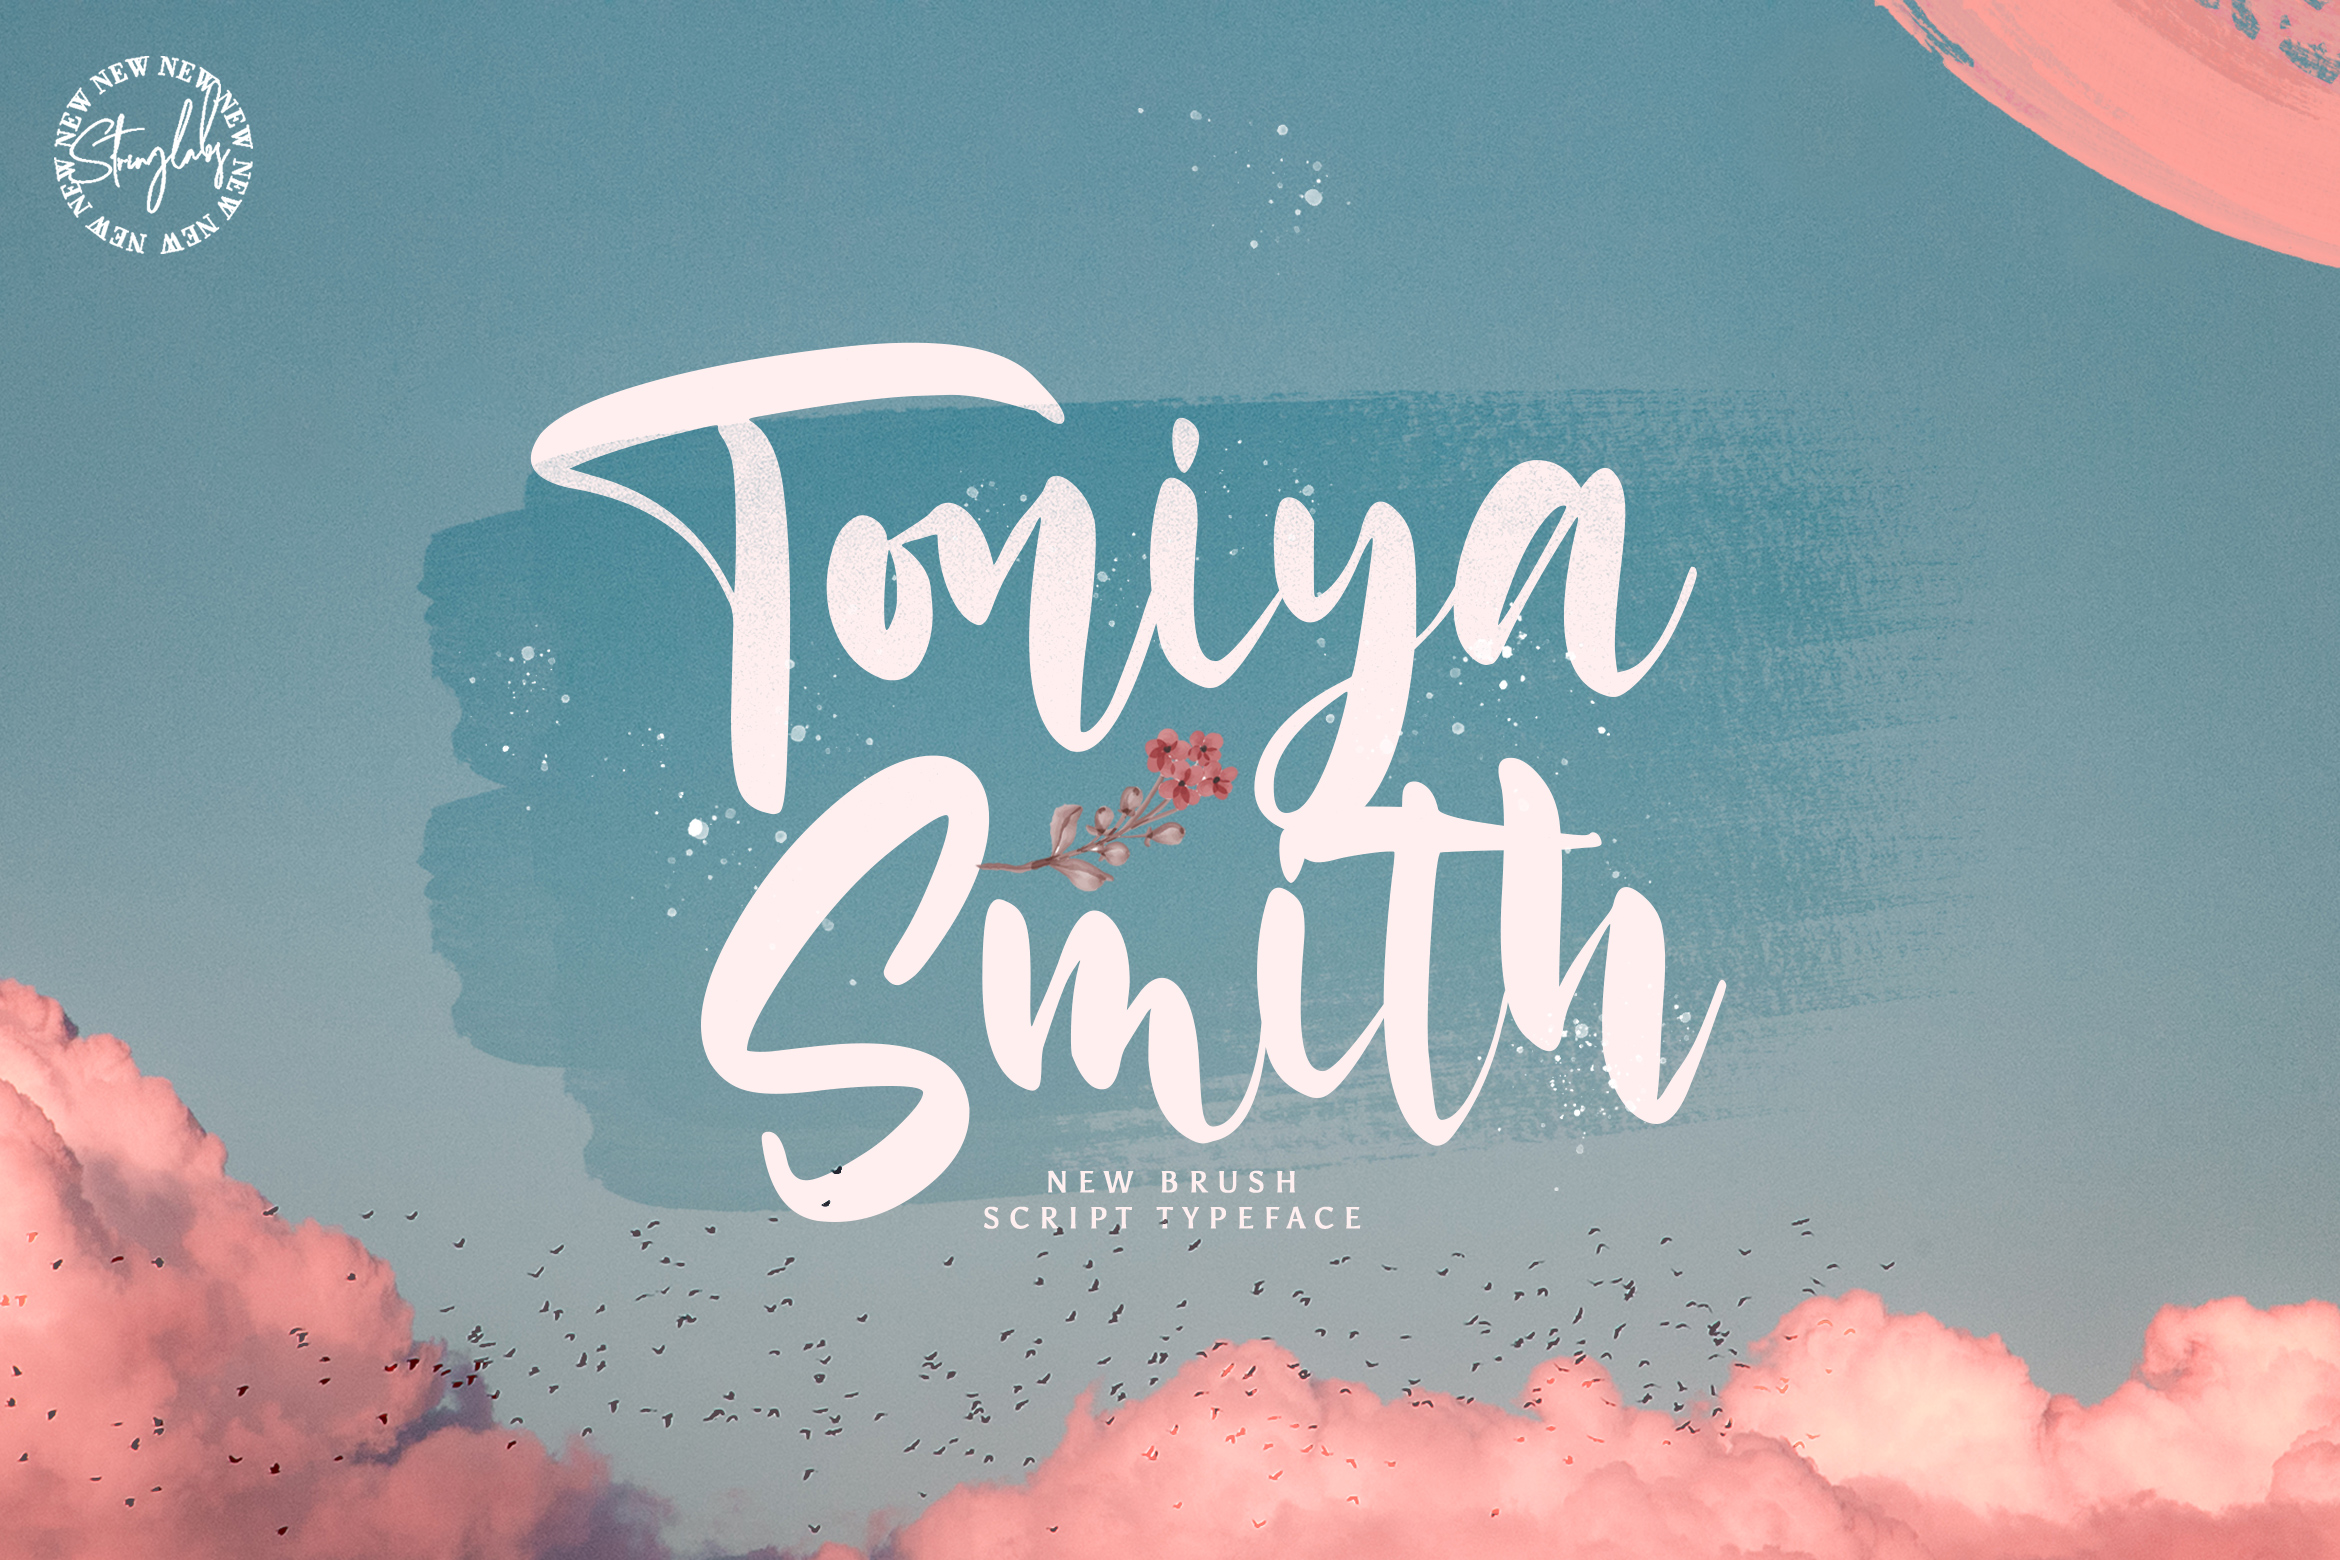 Toniya Smith